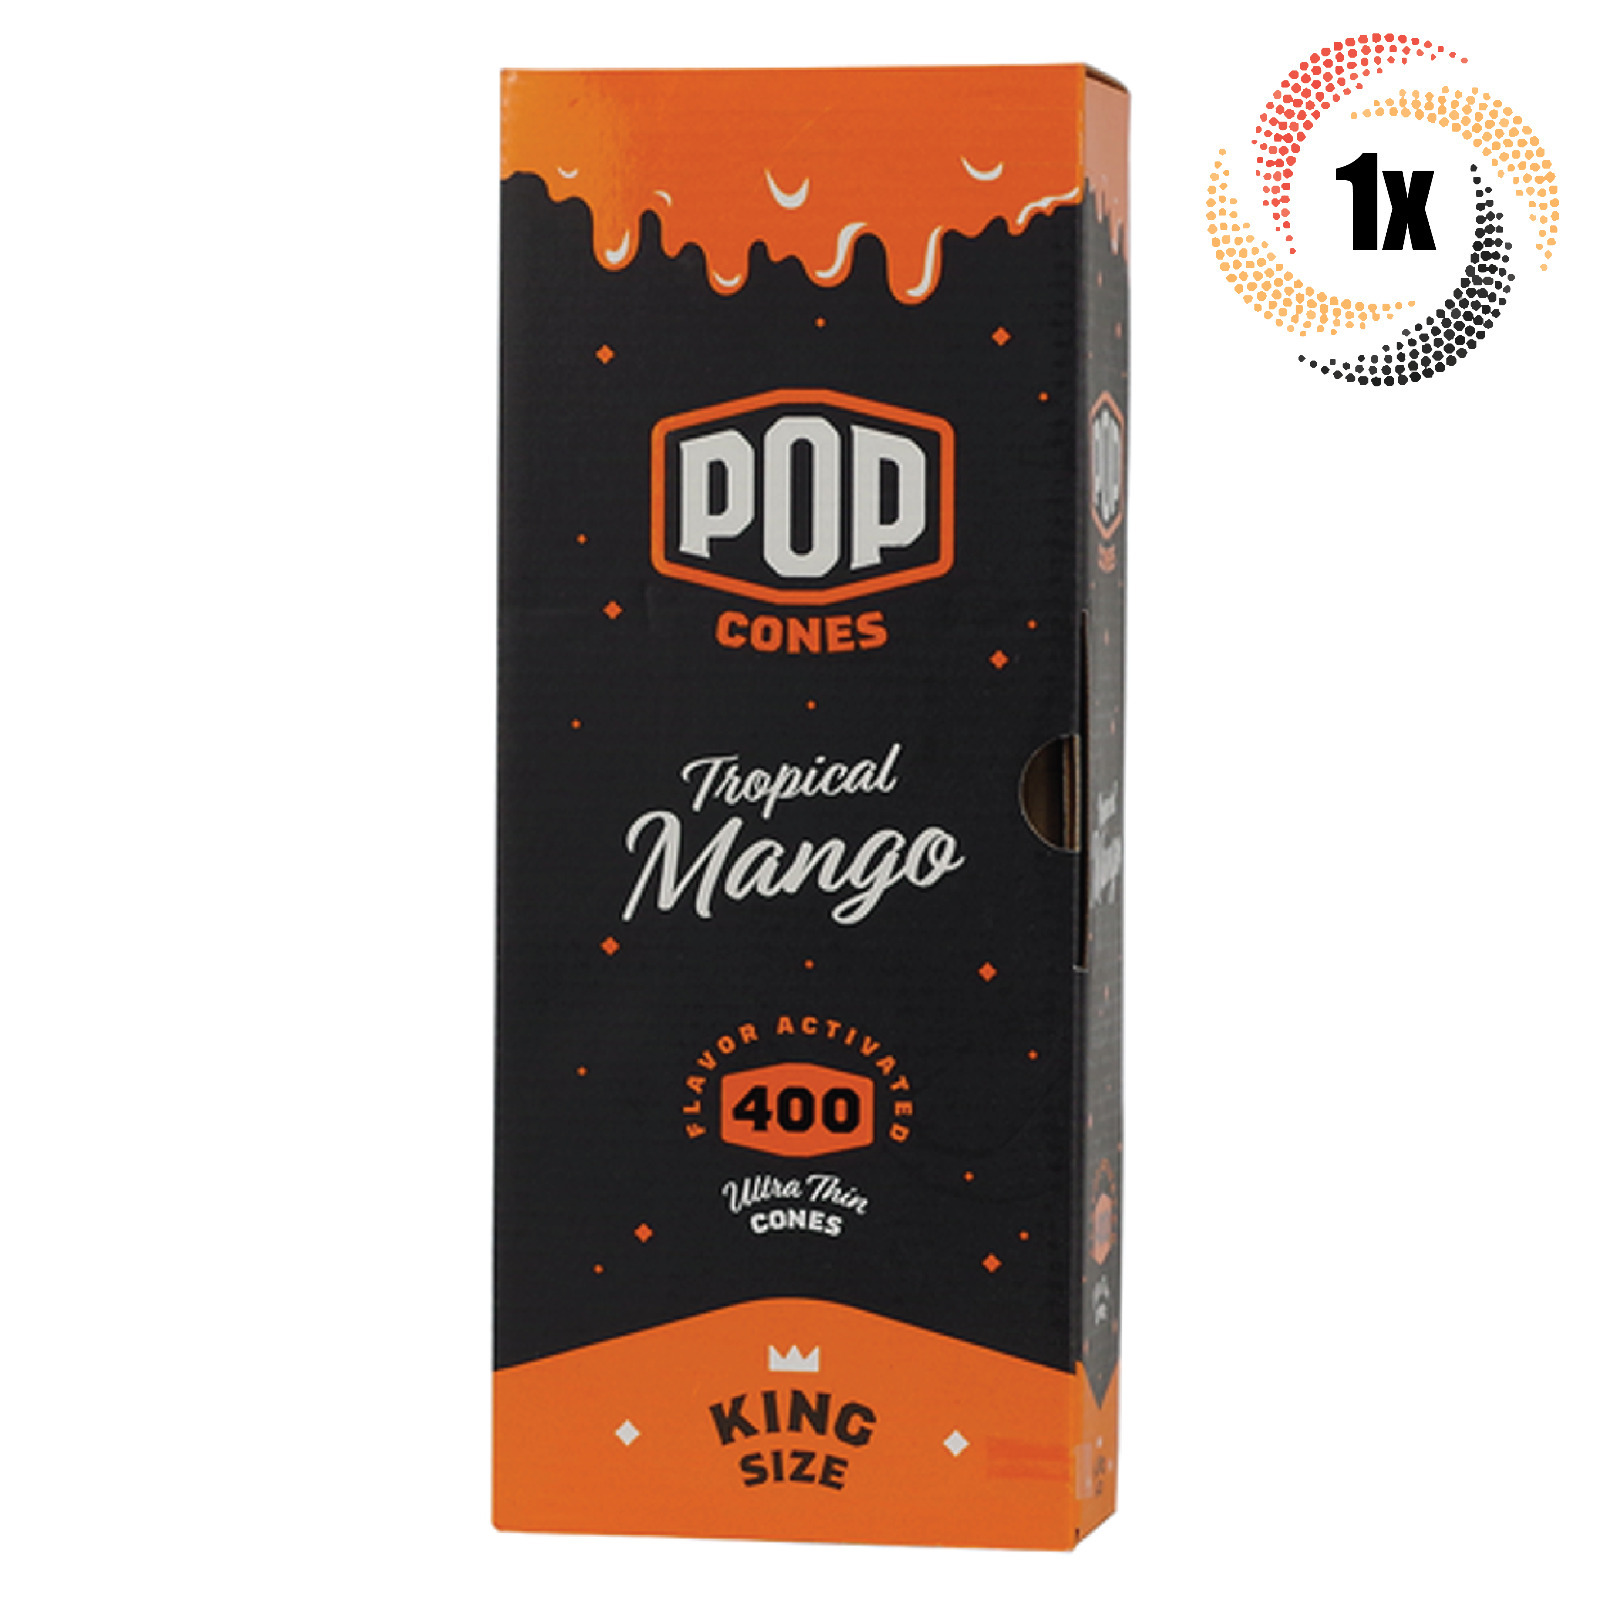 1x Box Pop Tropical Mango Cones | 400 Cones Each | King Size | + 2 Free Tubes